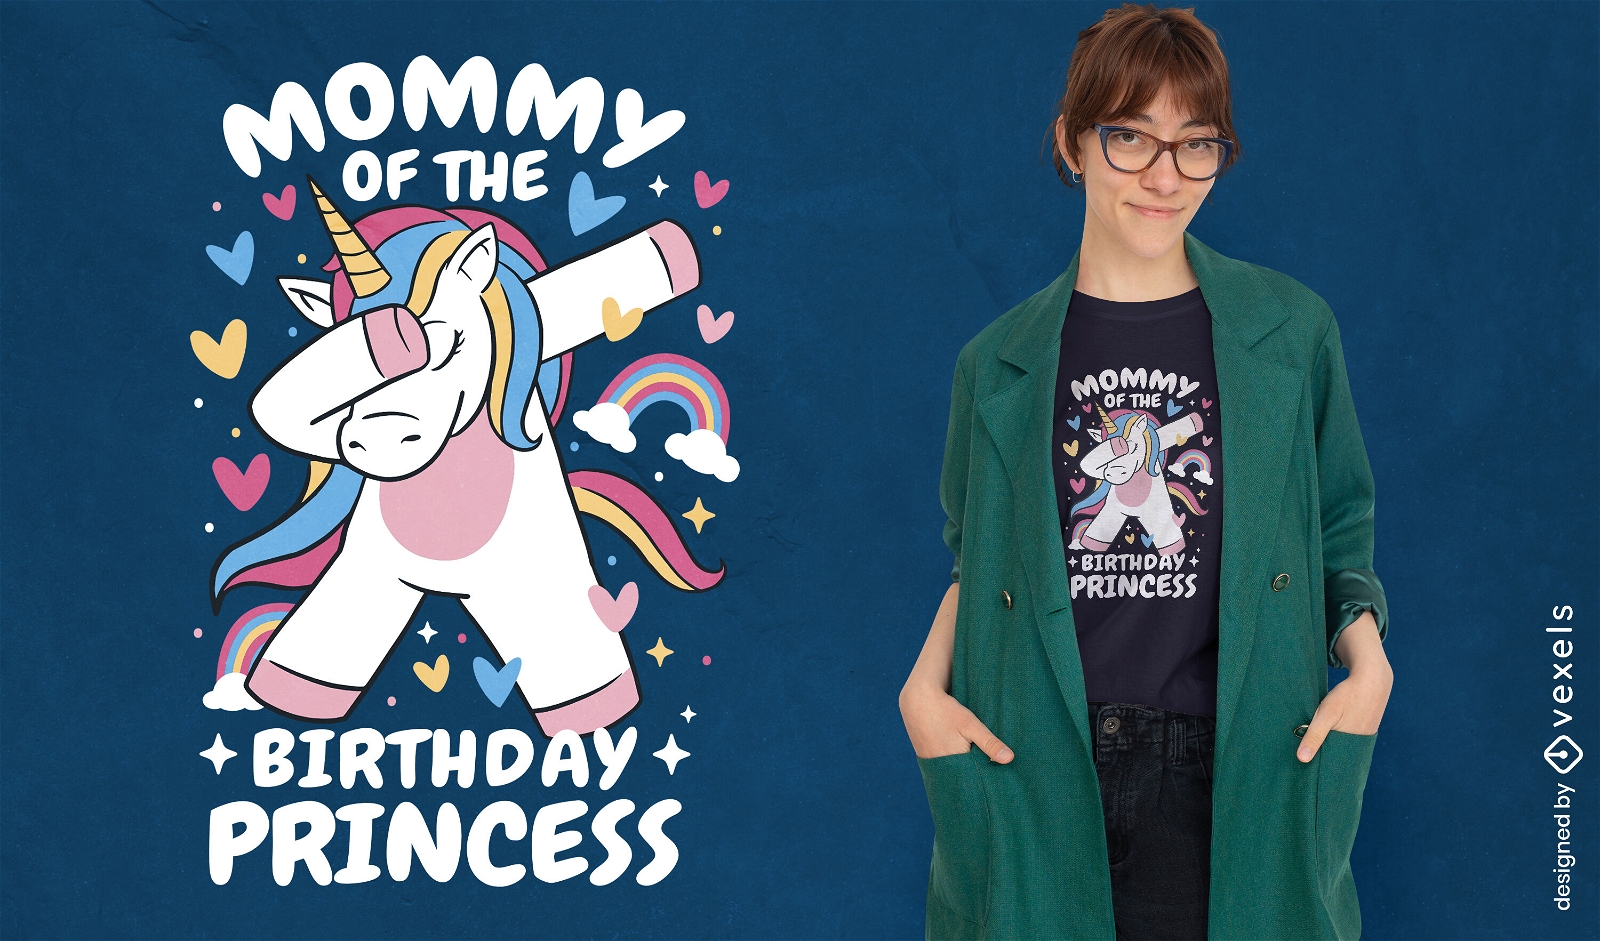 Funny birthday princess unicorn t-shirt design